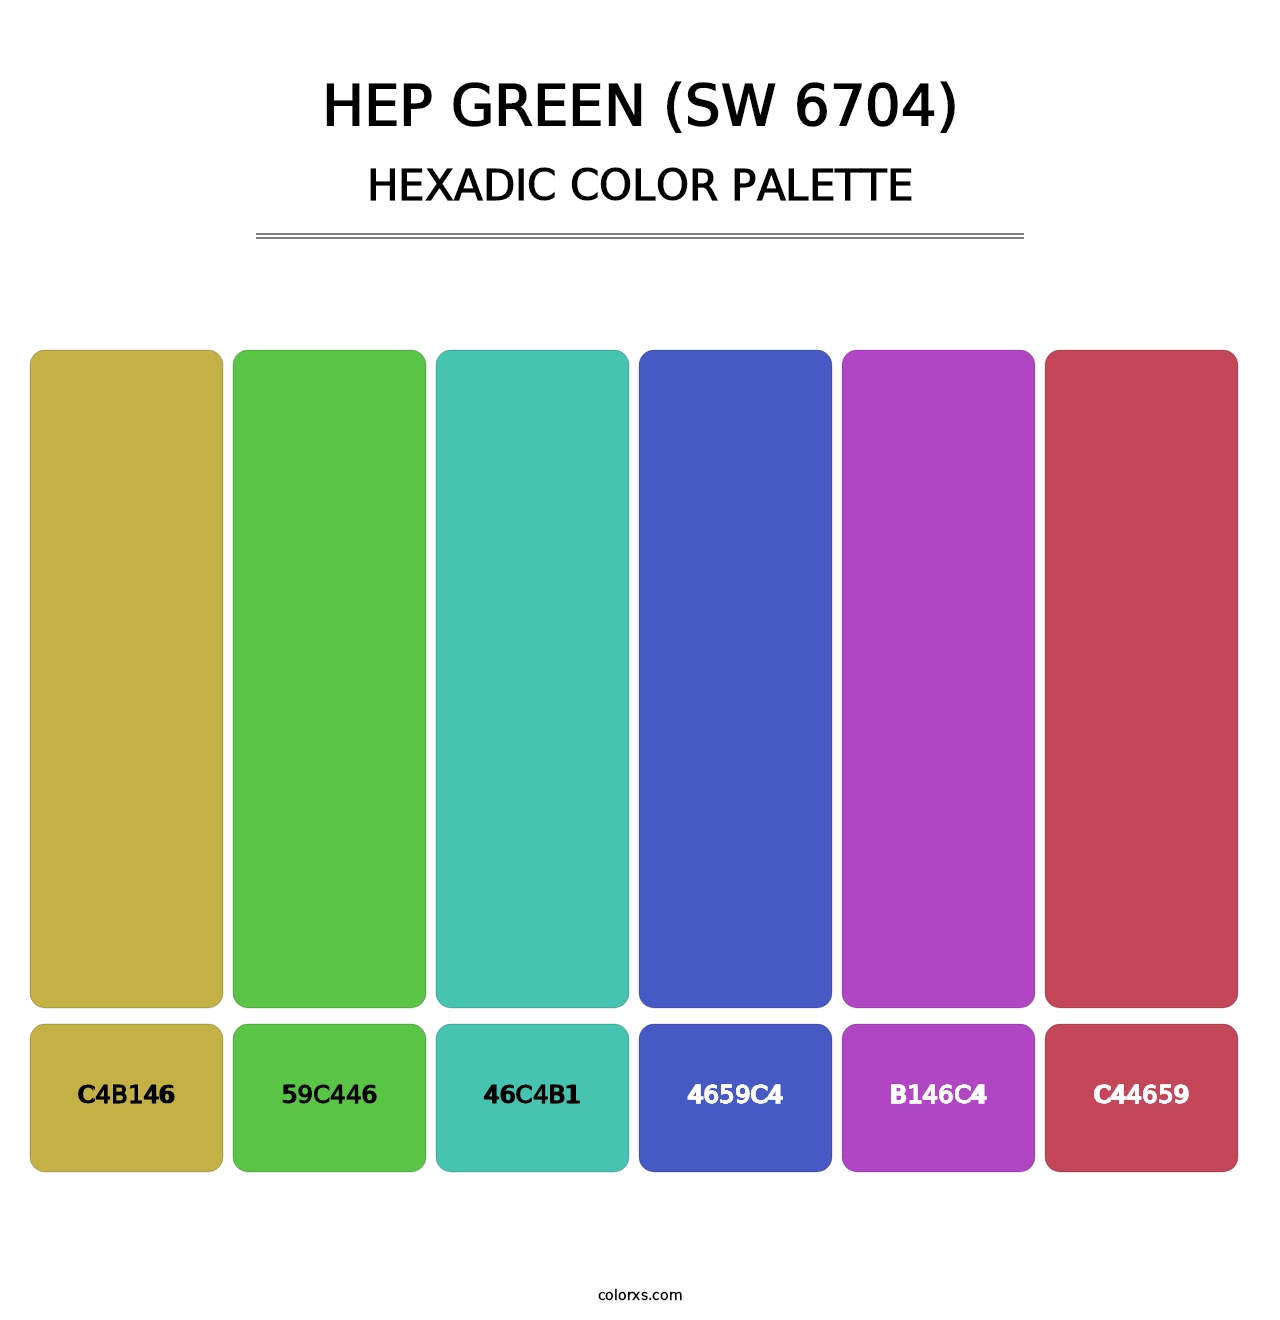 Hep Green (SW 6704) - Hexadic Color Palette